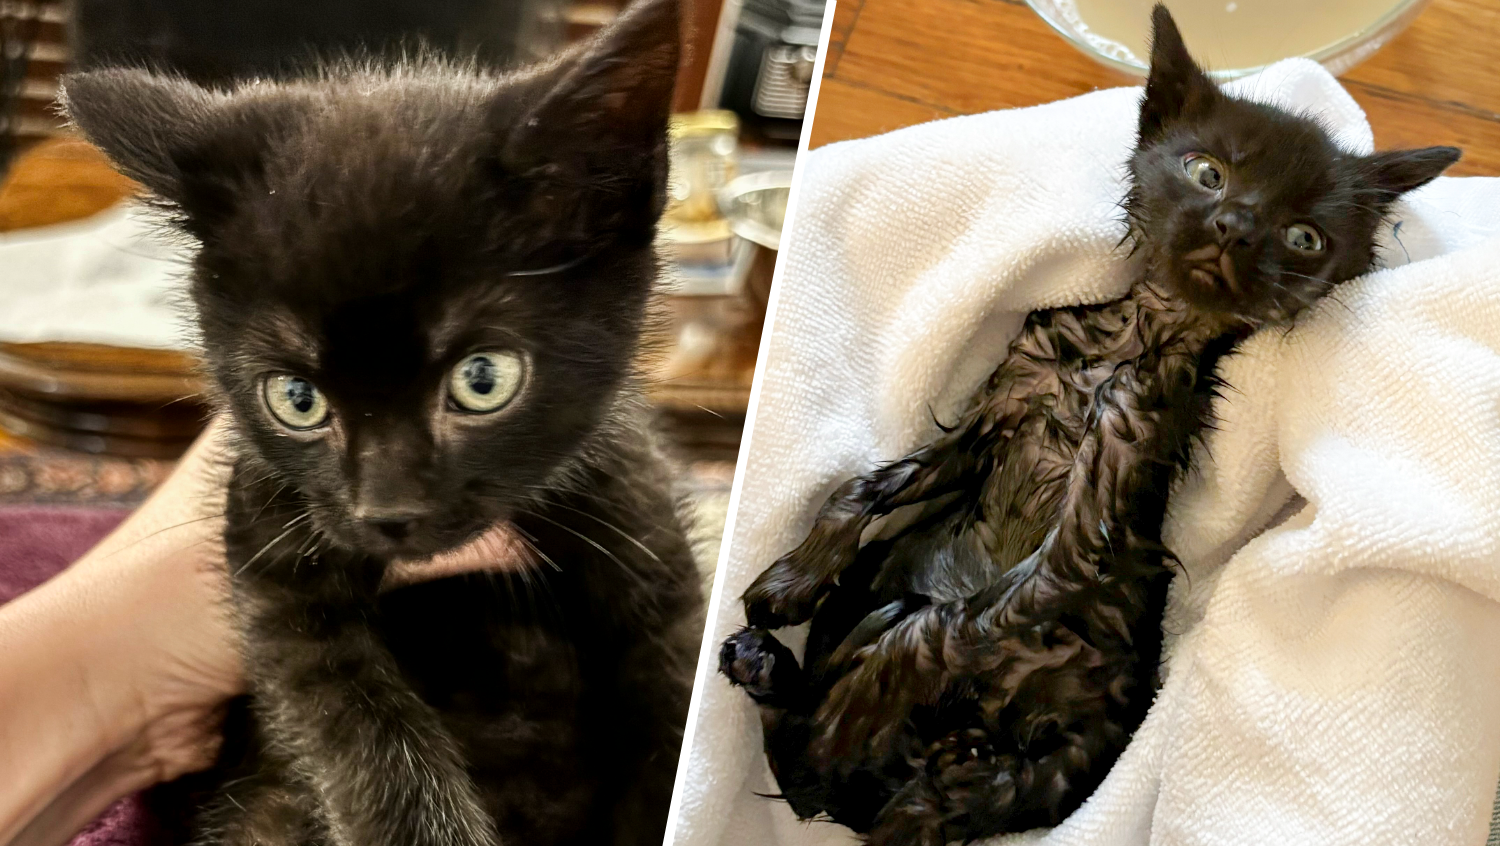 5-week-old kitten named Applesauce rescued from freezing